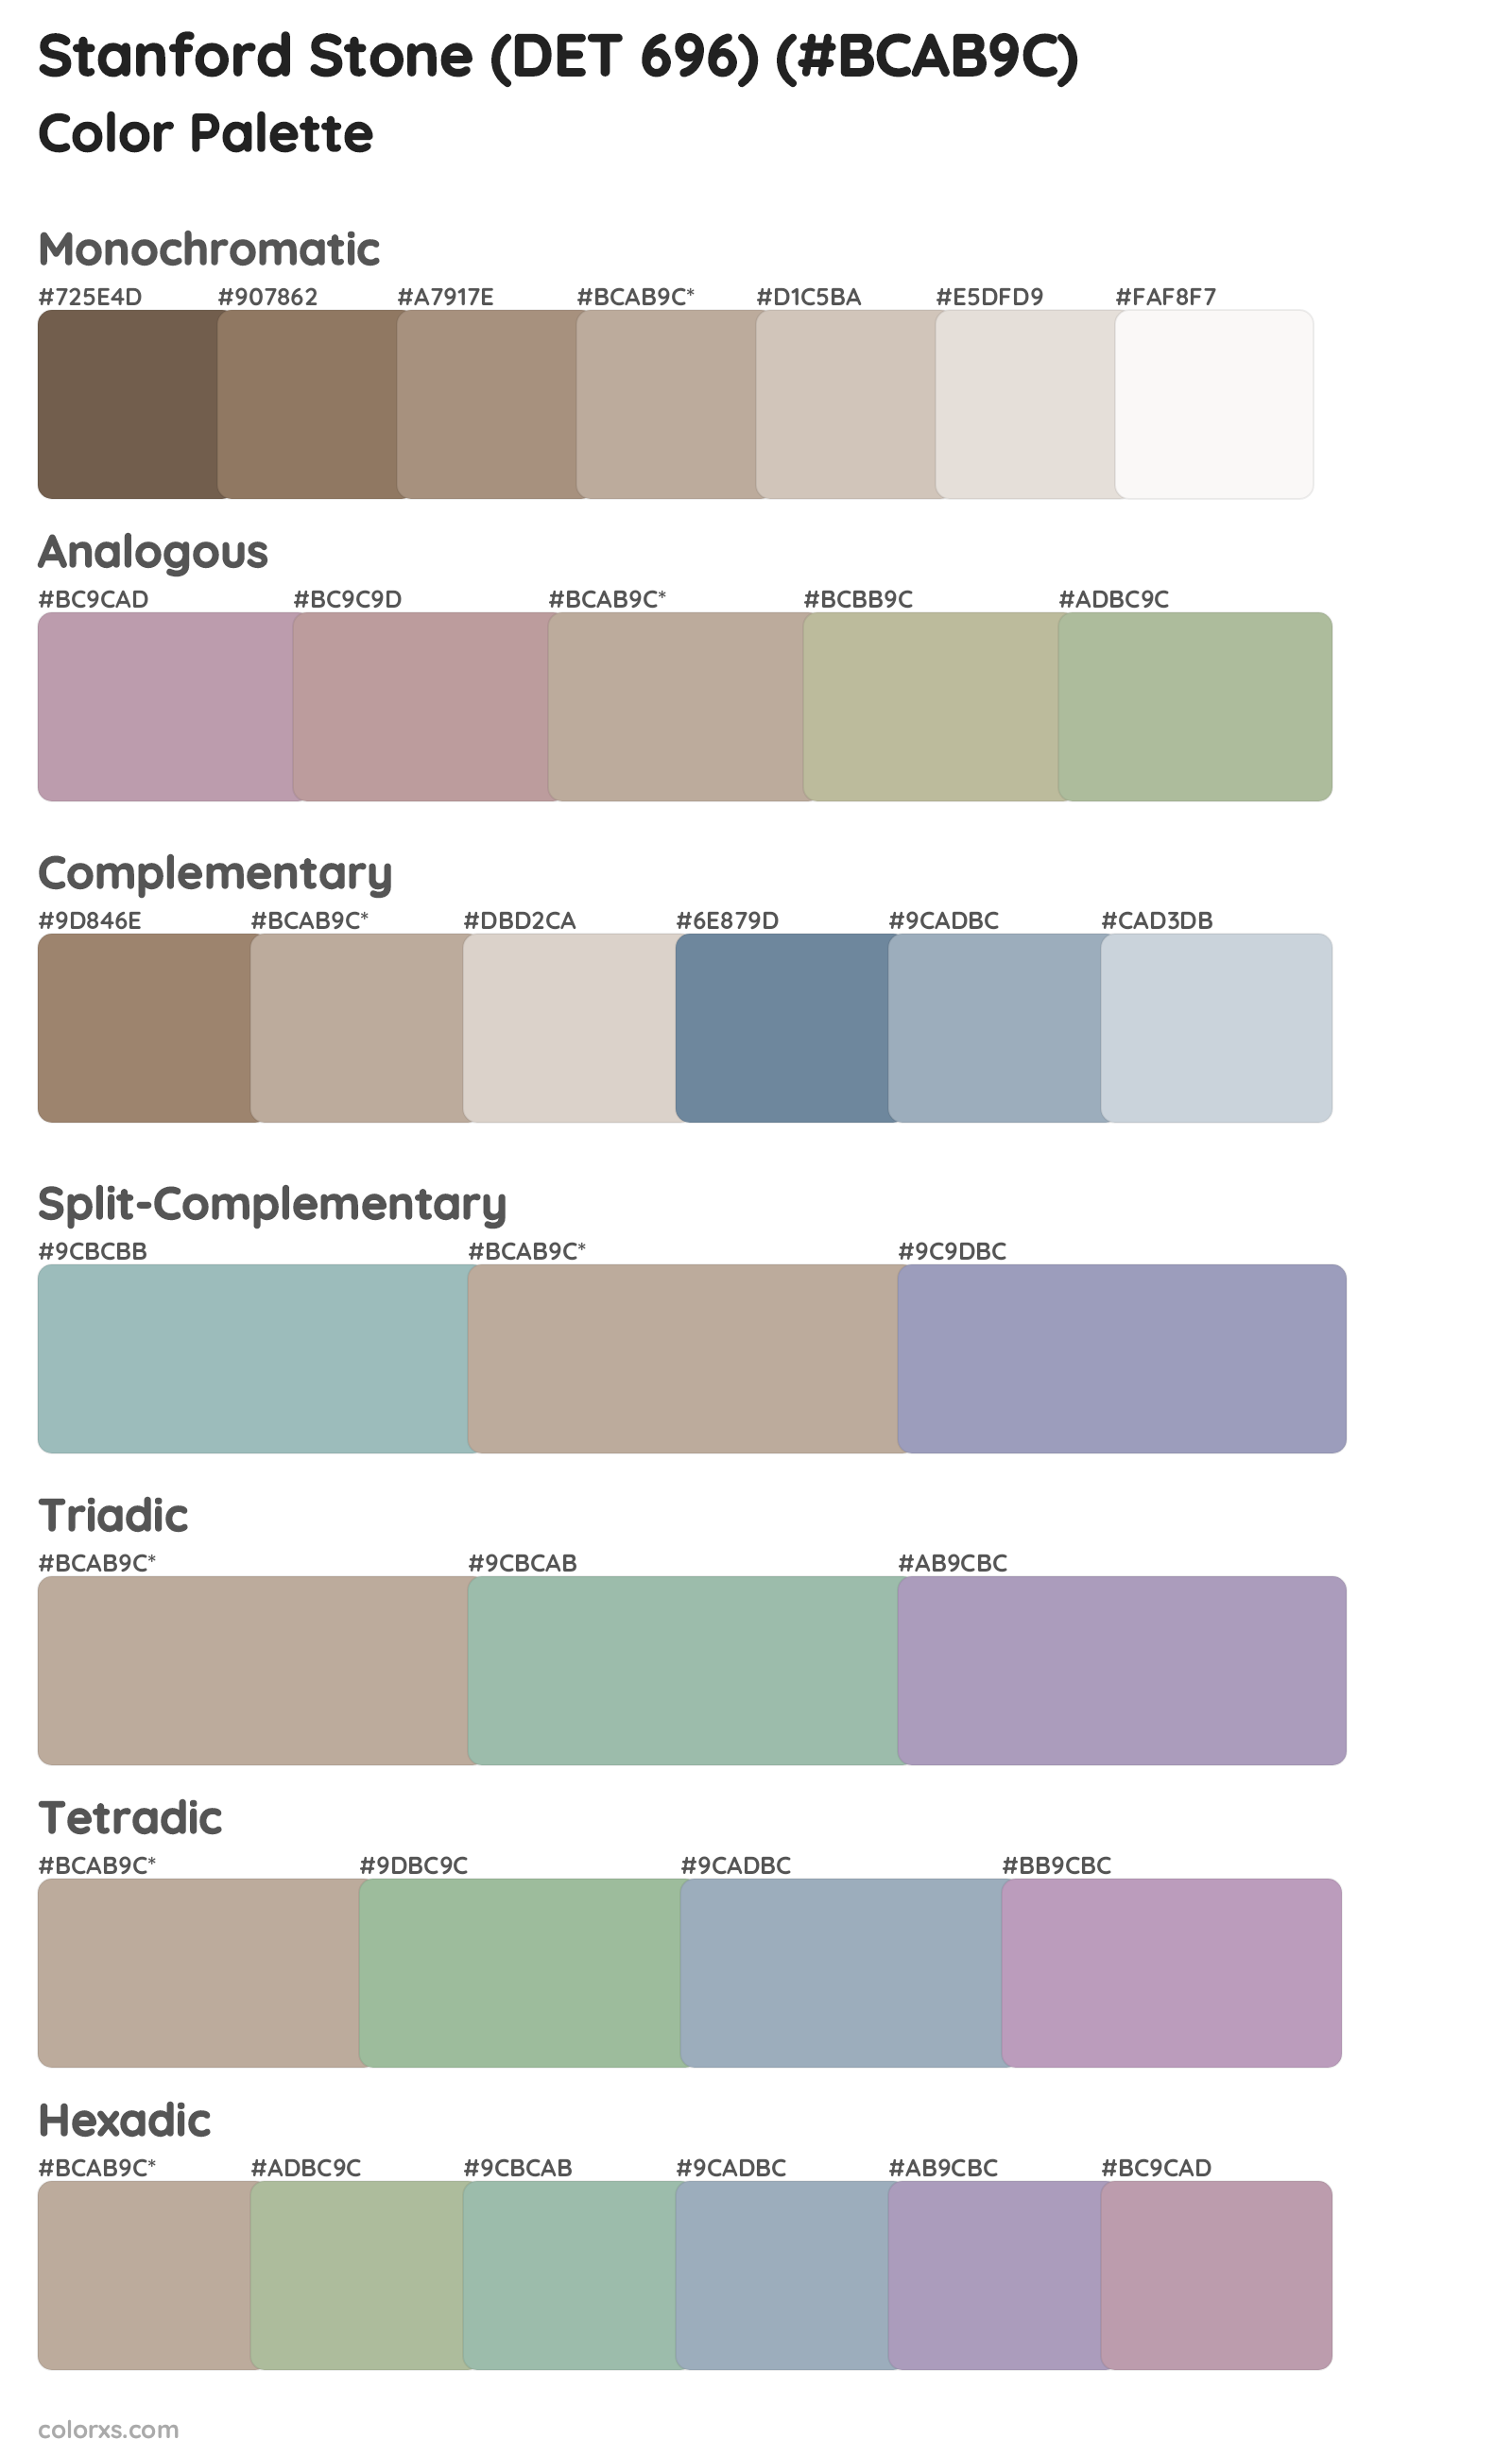 Stanford Stone (DET 696) Color Scheme Palettes